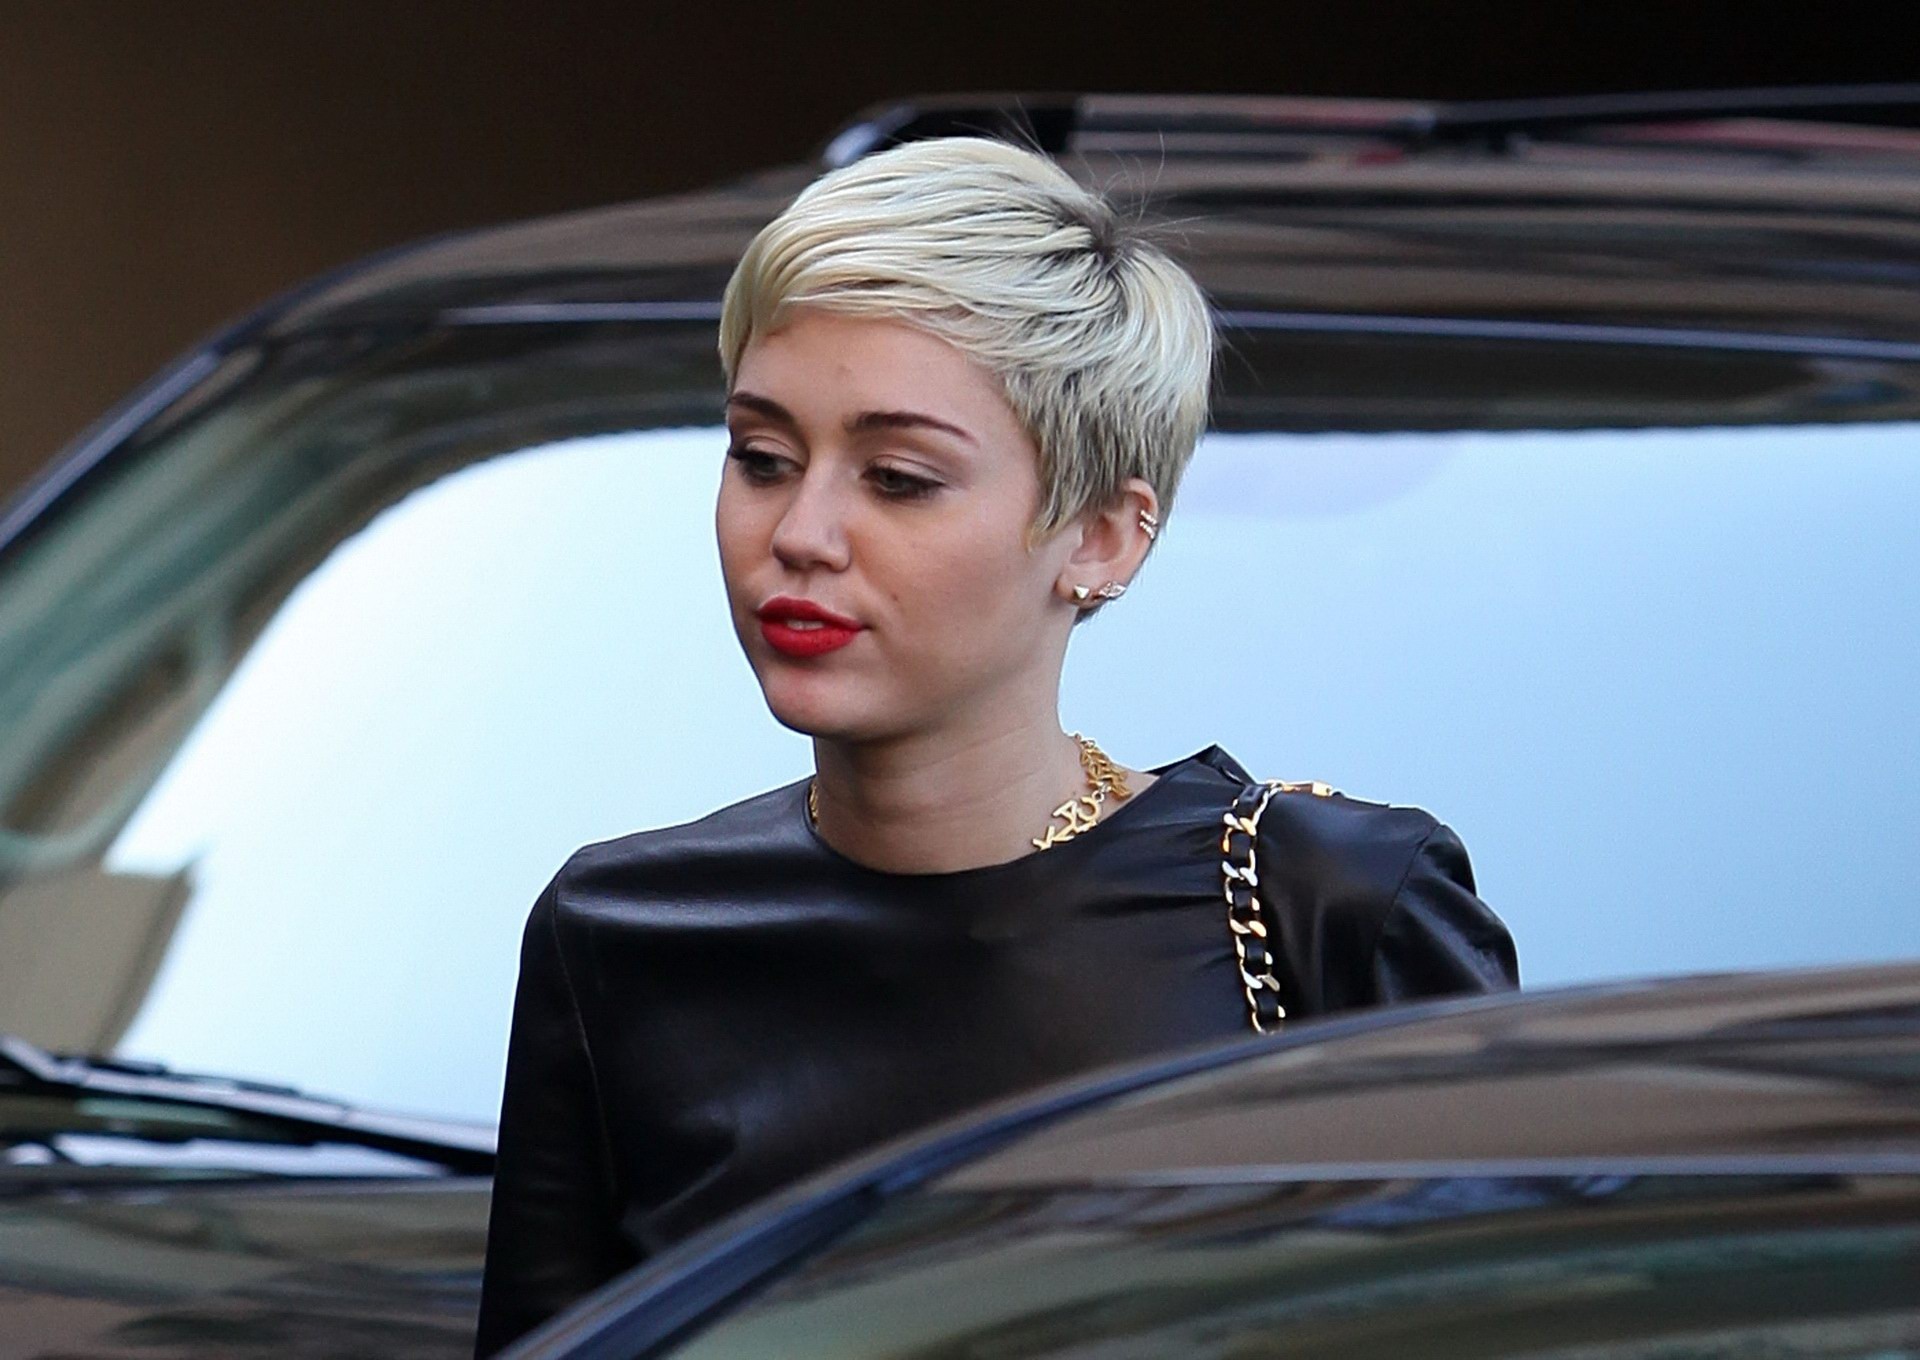 Miley Cyrus langbeinig in Jeans-Shorts und Leder-Top in Beverly Hills
 #75235290